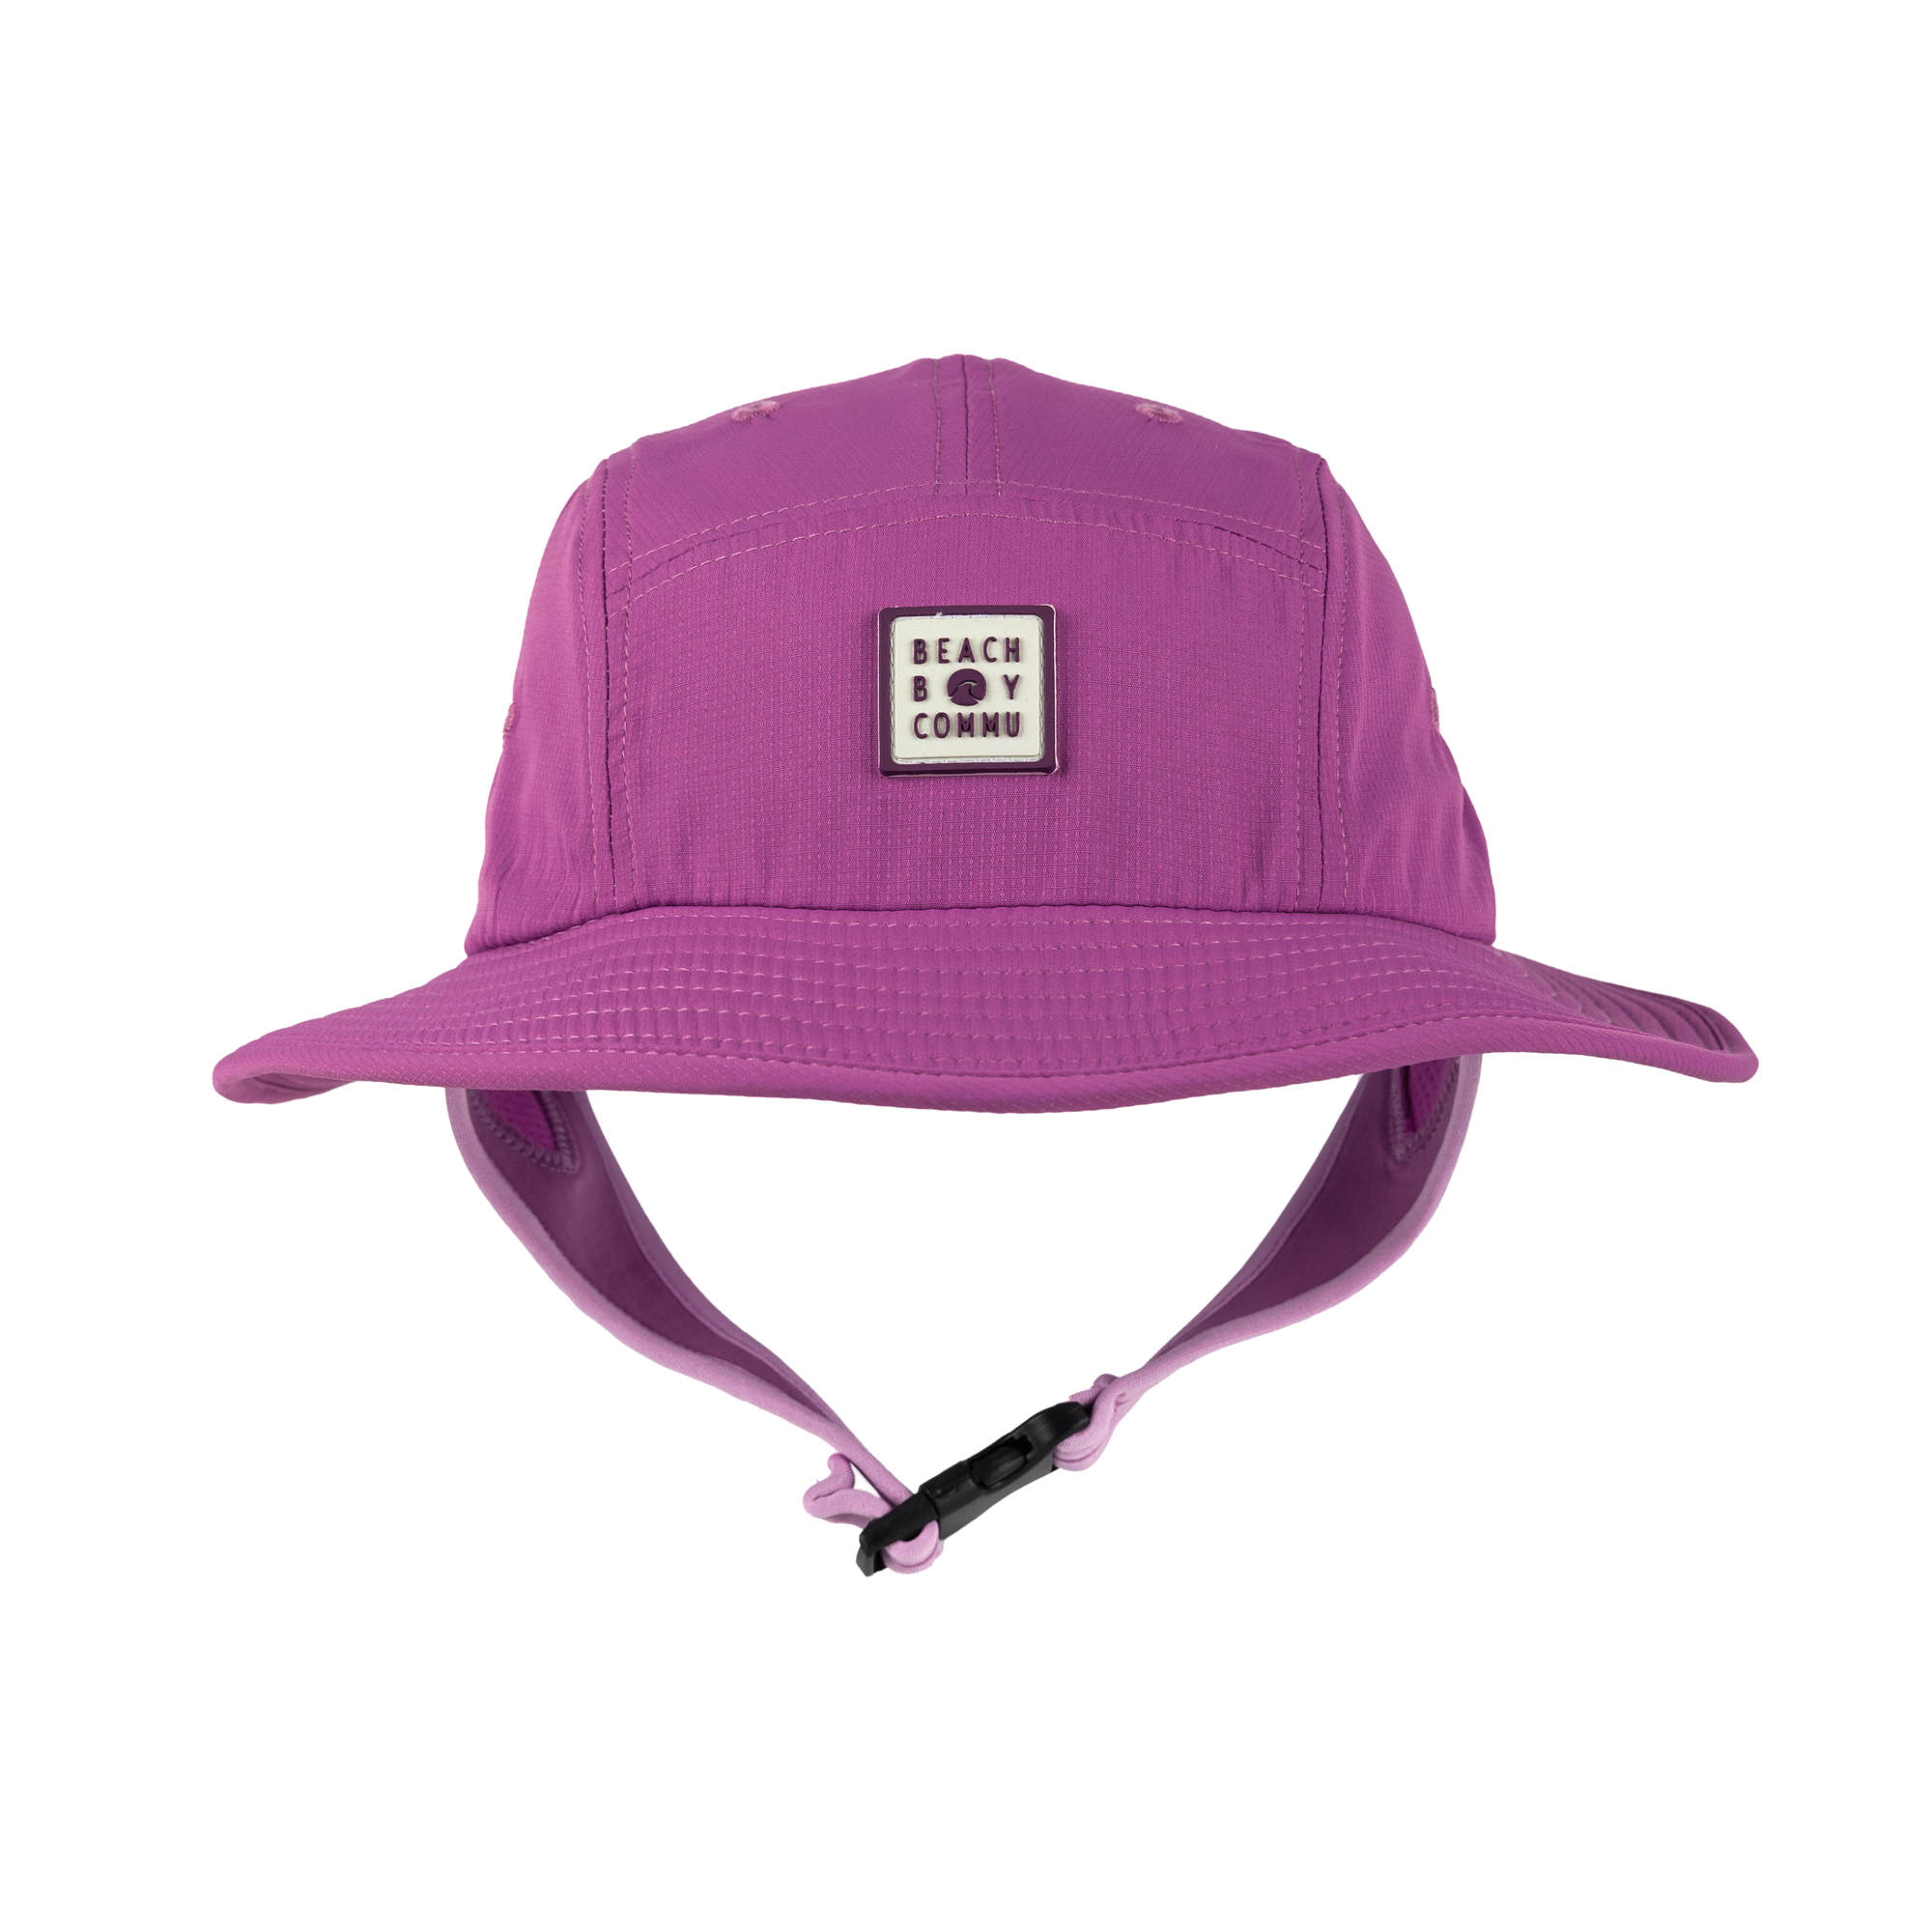 Purple Lavender - Bucket Hat - Beach Boy Commu